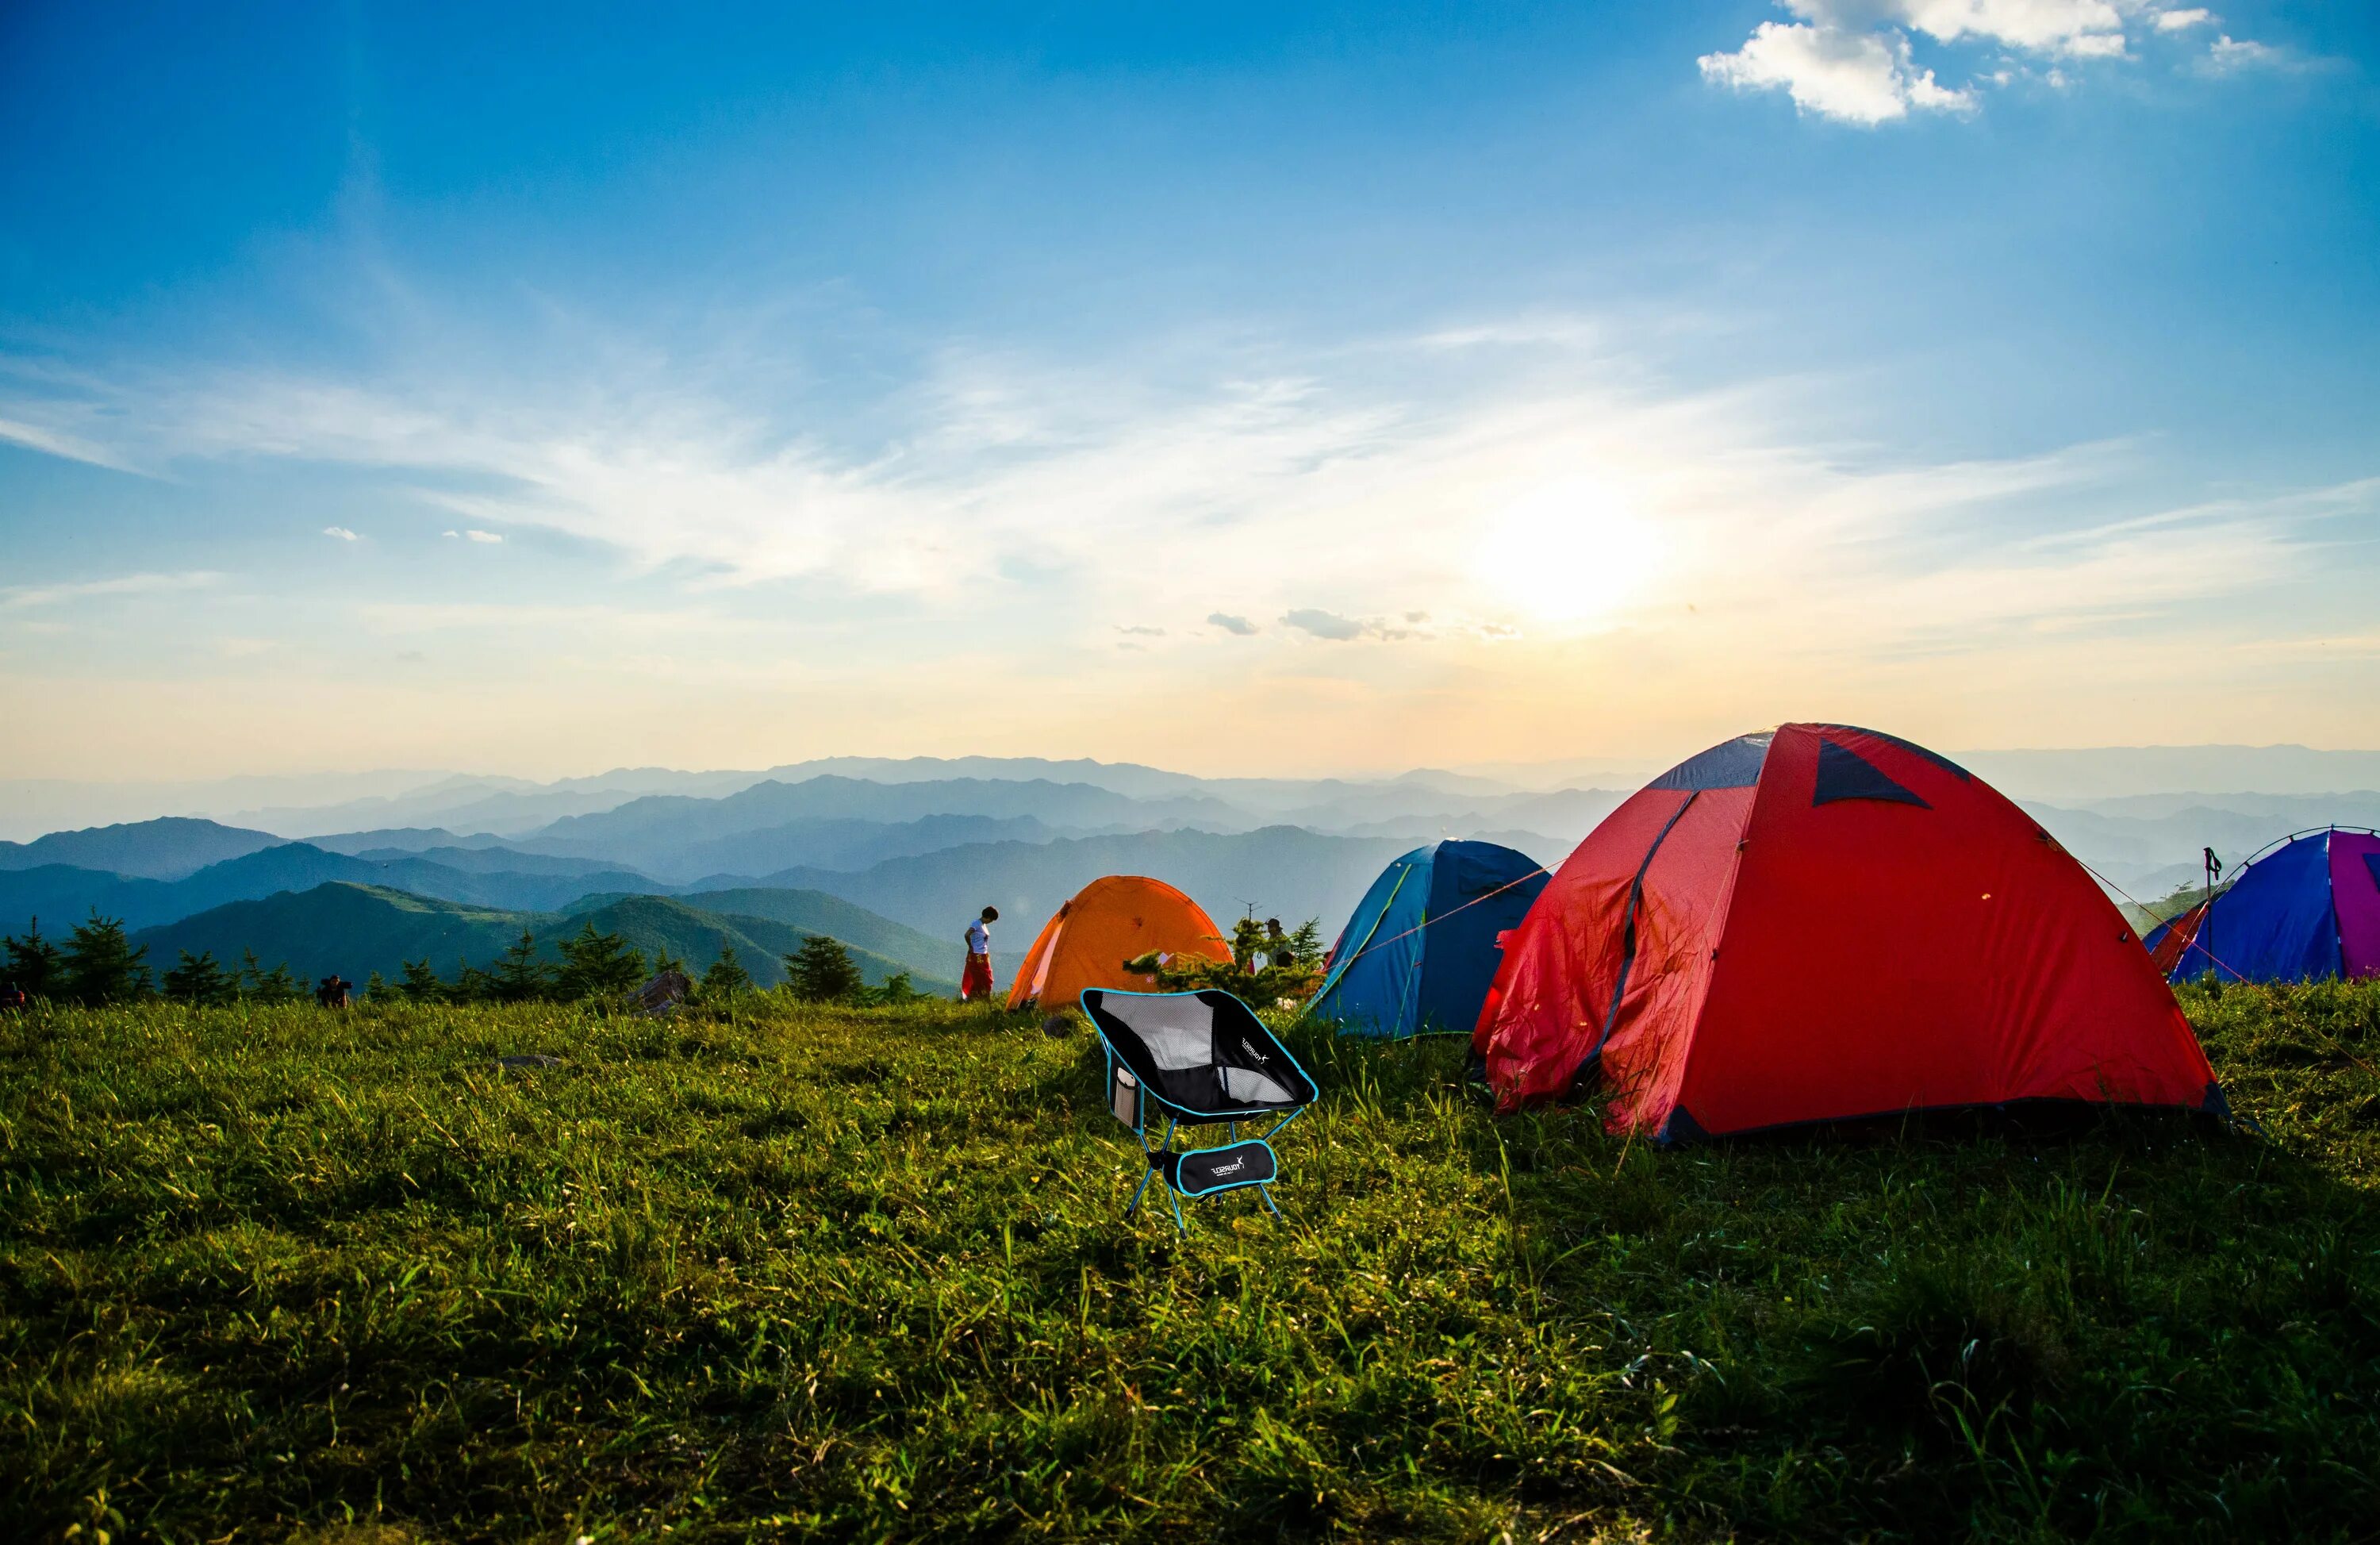 Палатка Camping Tent. Палатка на Поляне. Палатка в горах. Туризм с палатками. Camping outdoor